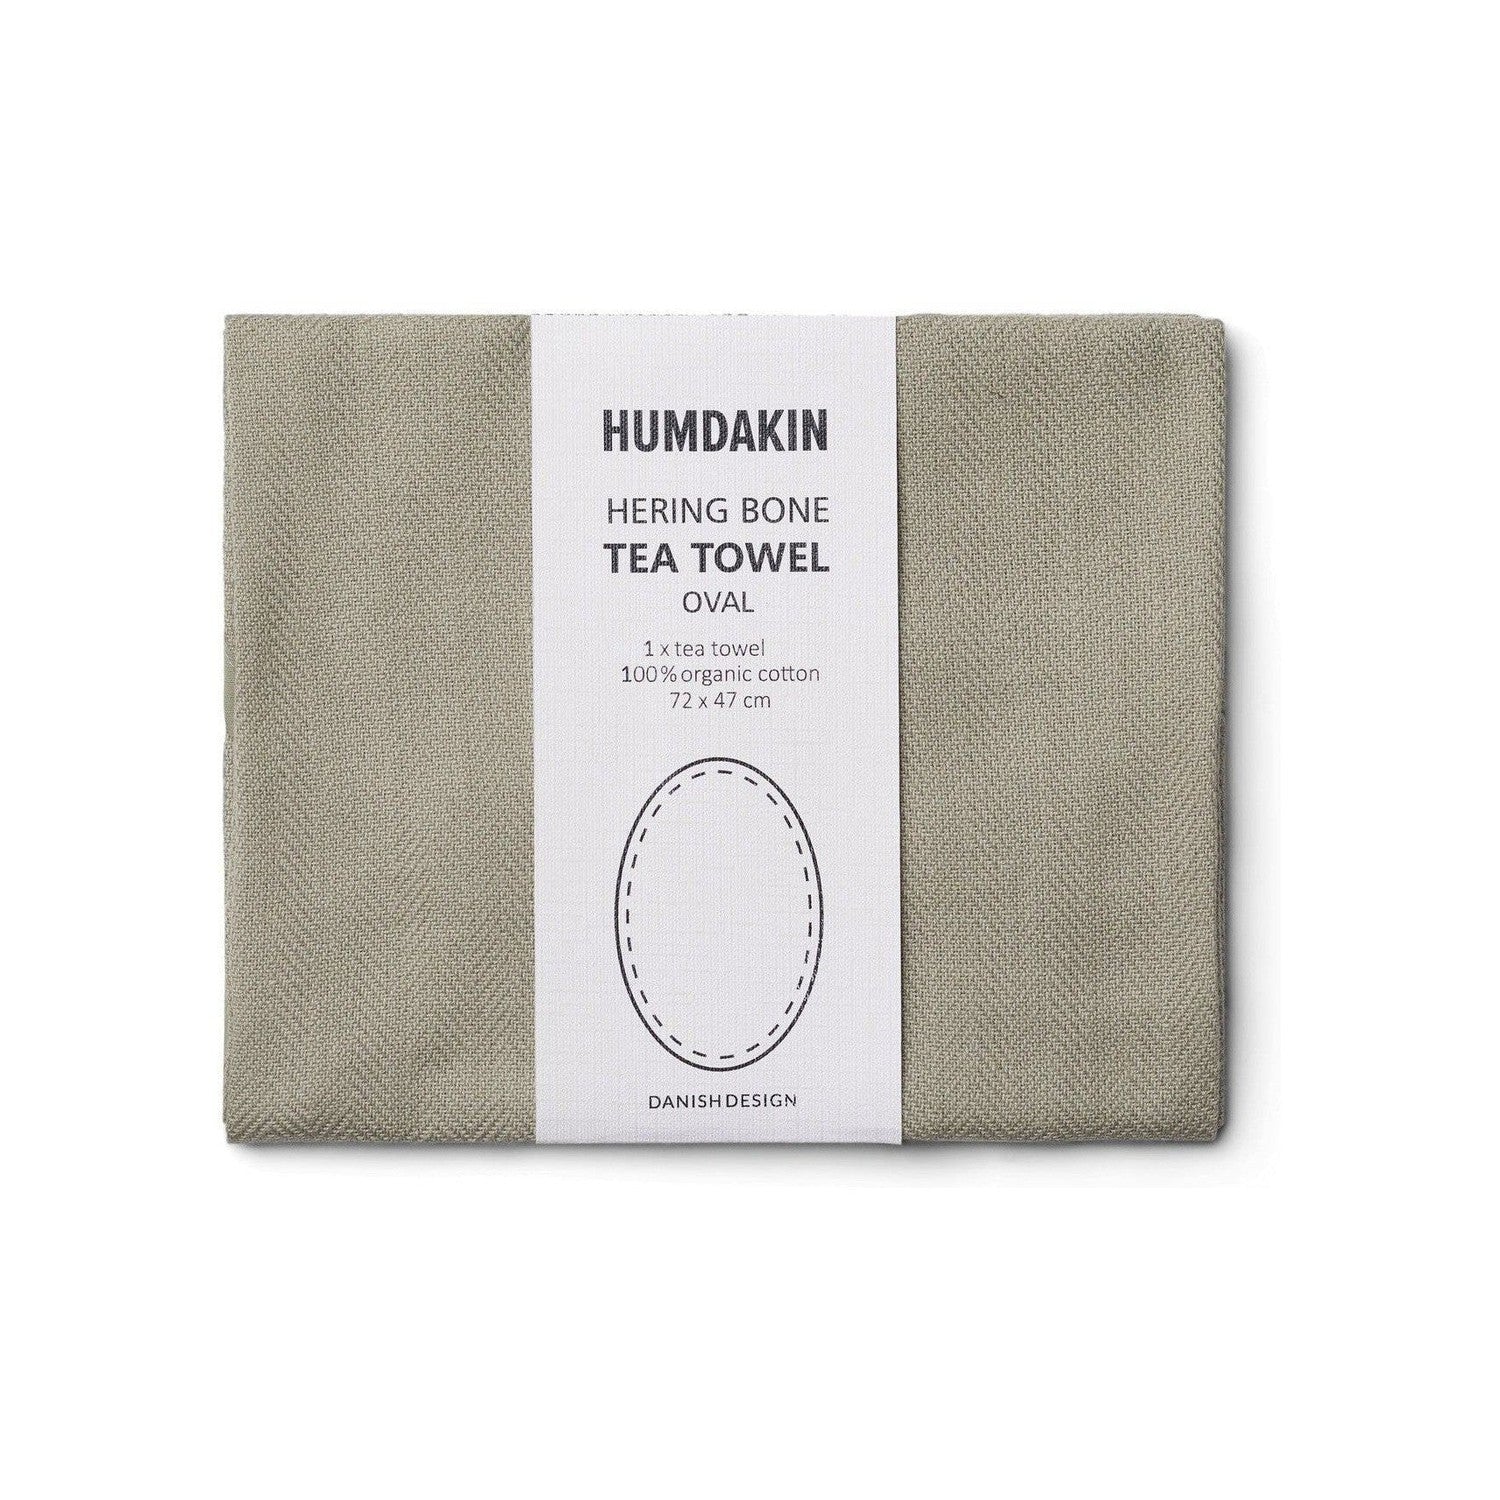 Humdakin Herring Bone Oval Tea Towel, Oak